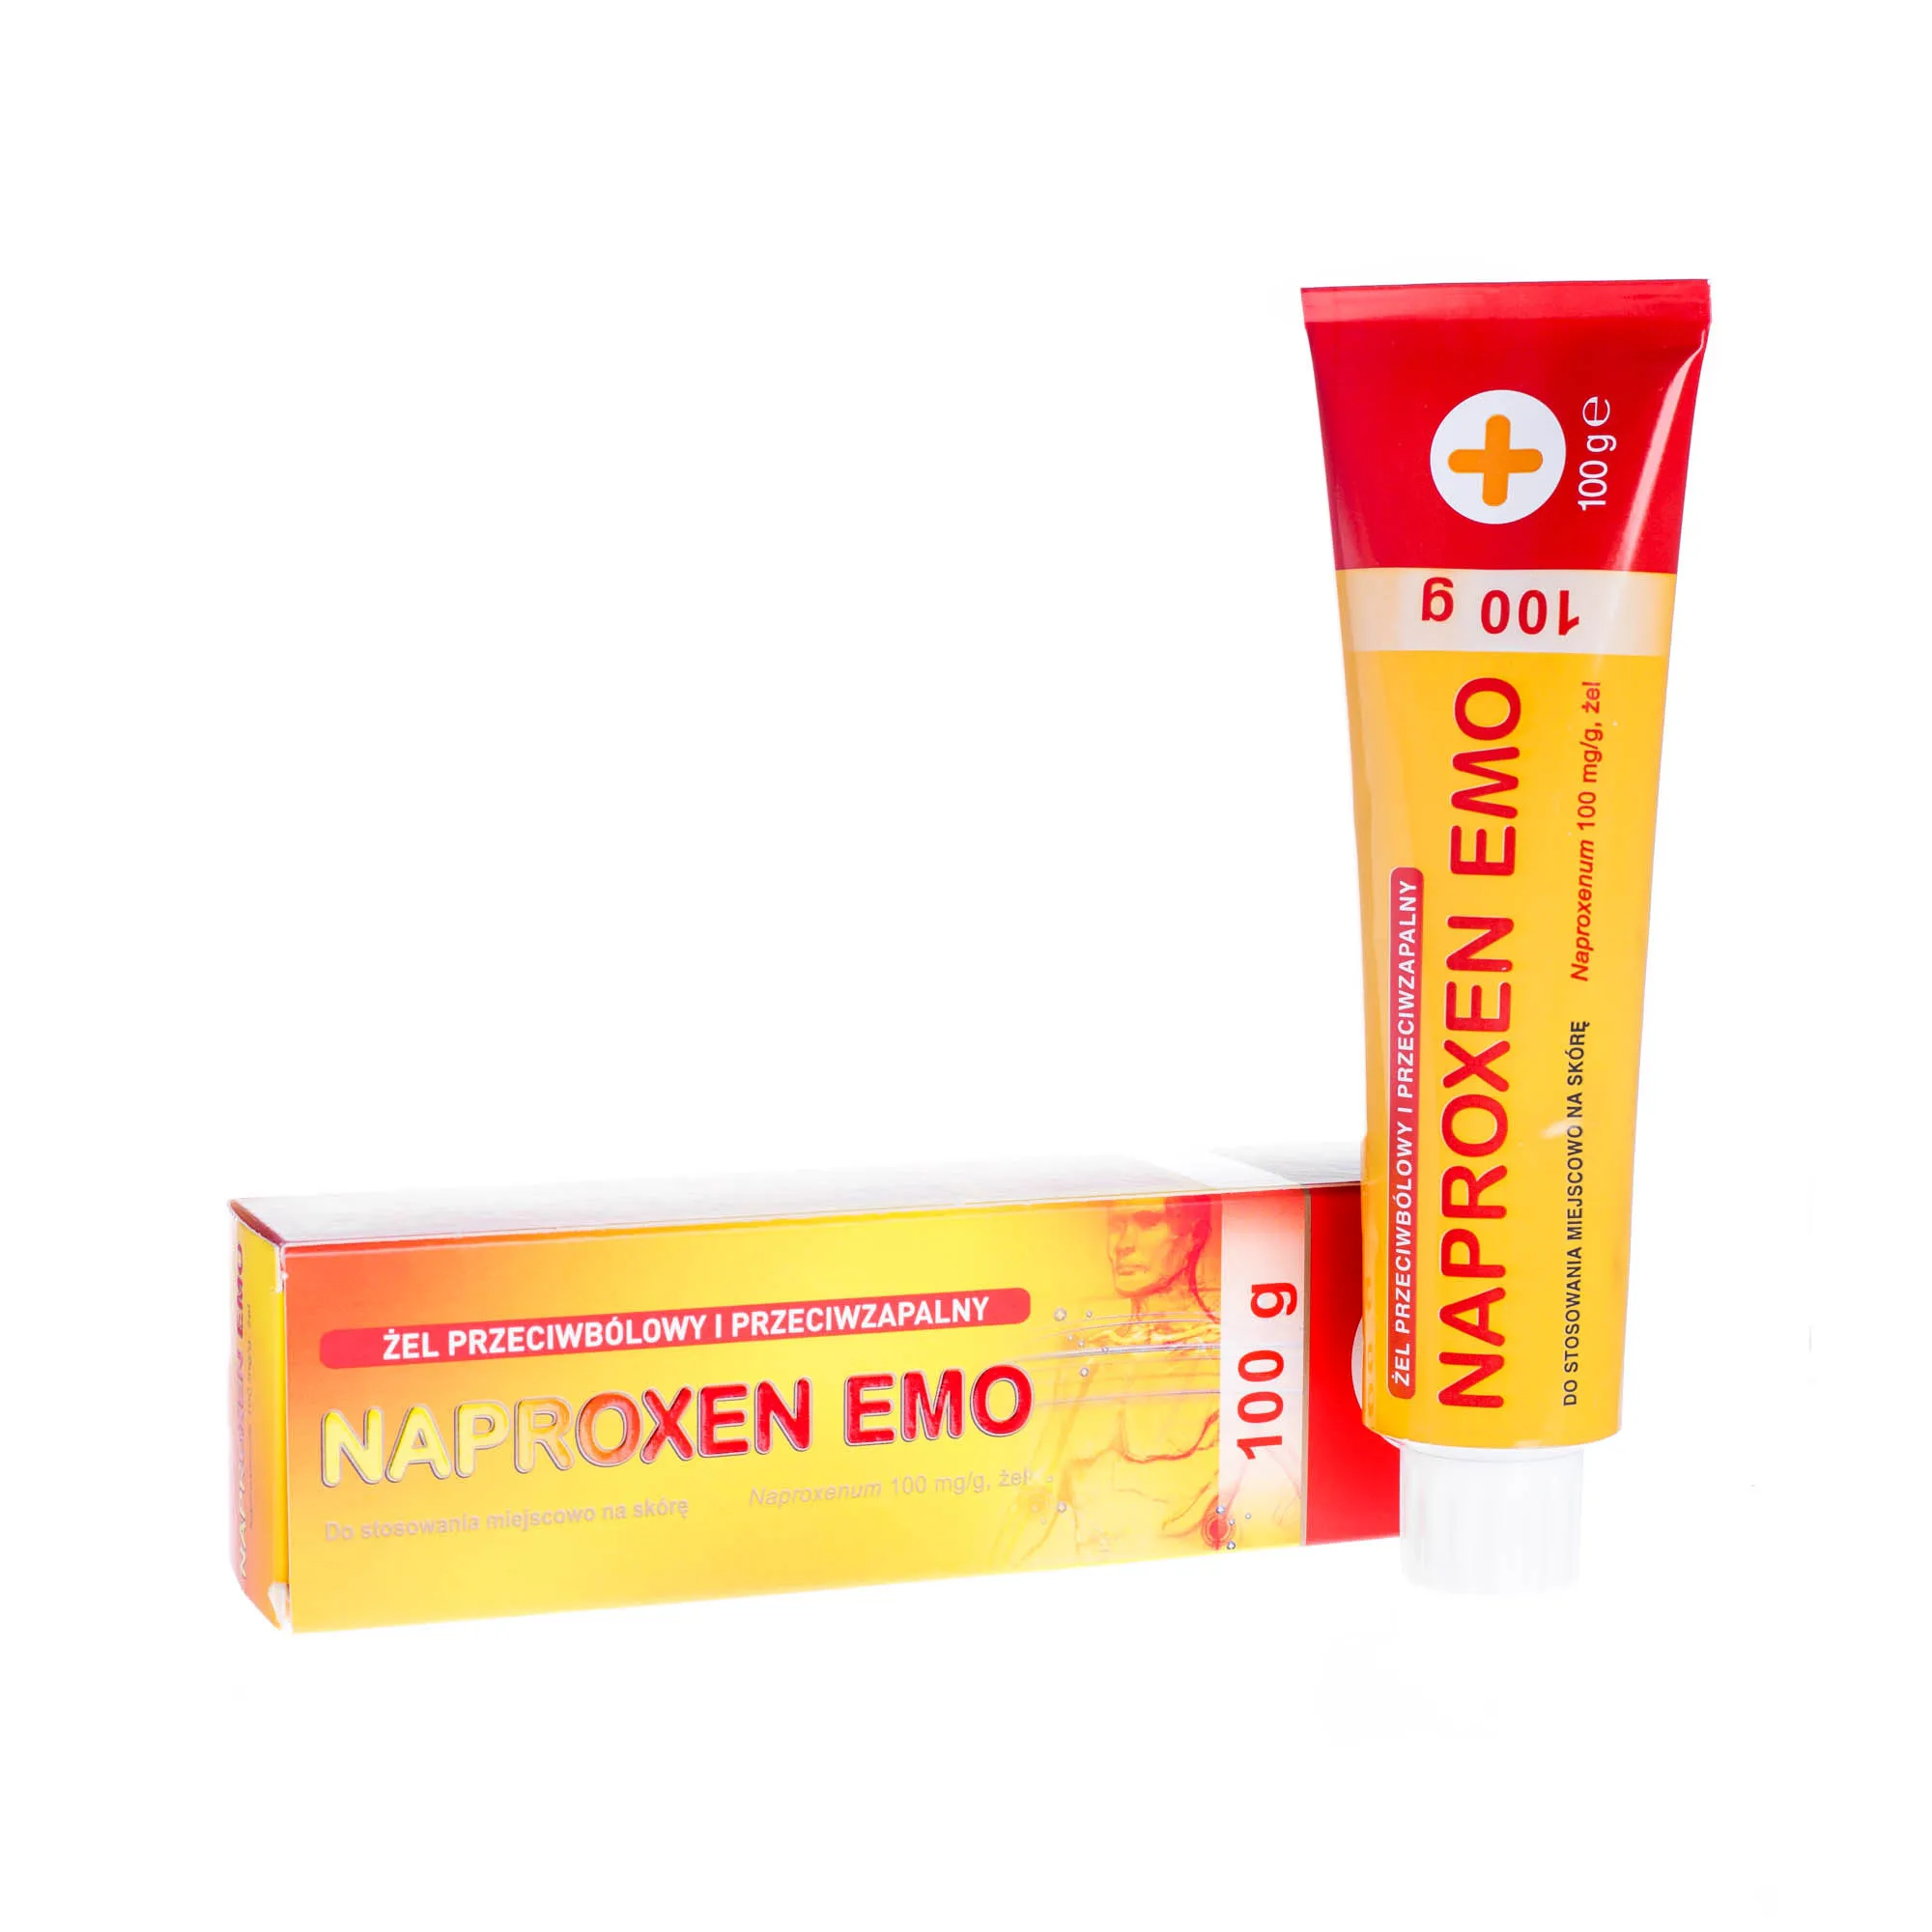 Naproxen Emo 100 mg/g, 100 g